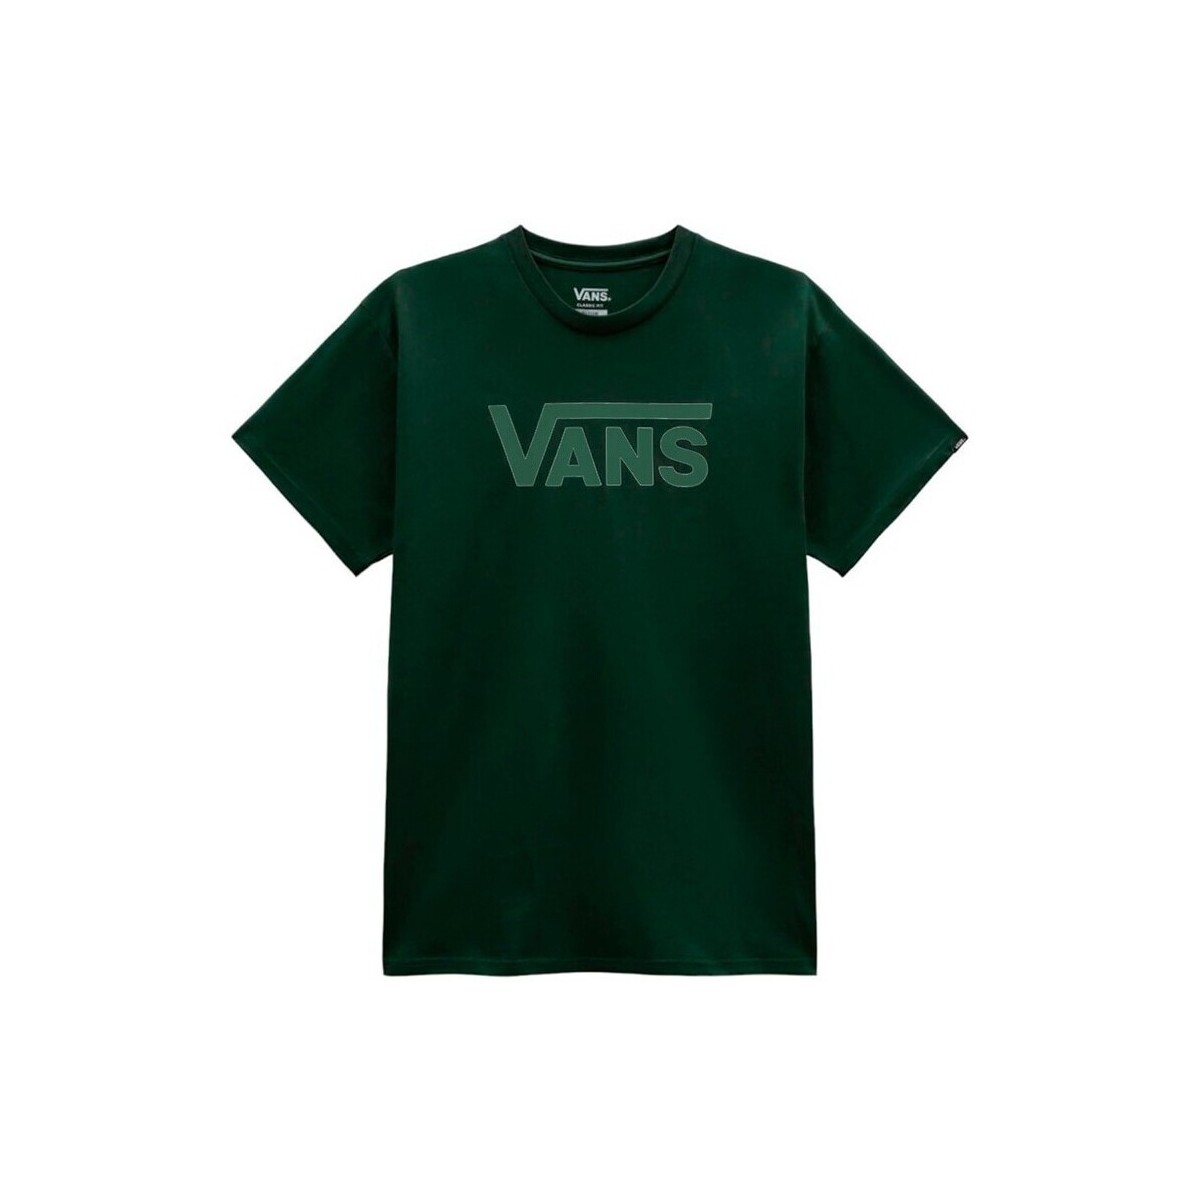 textil Hombre Camisetas manga corta Vans CLASSIC Verde